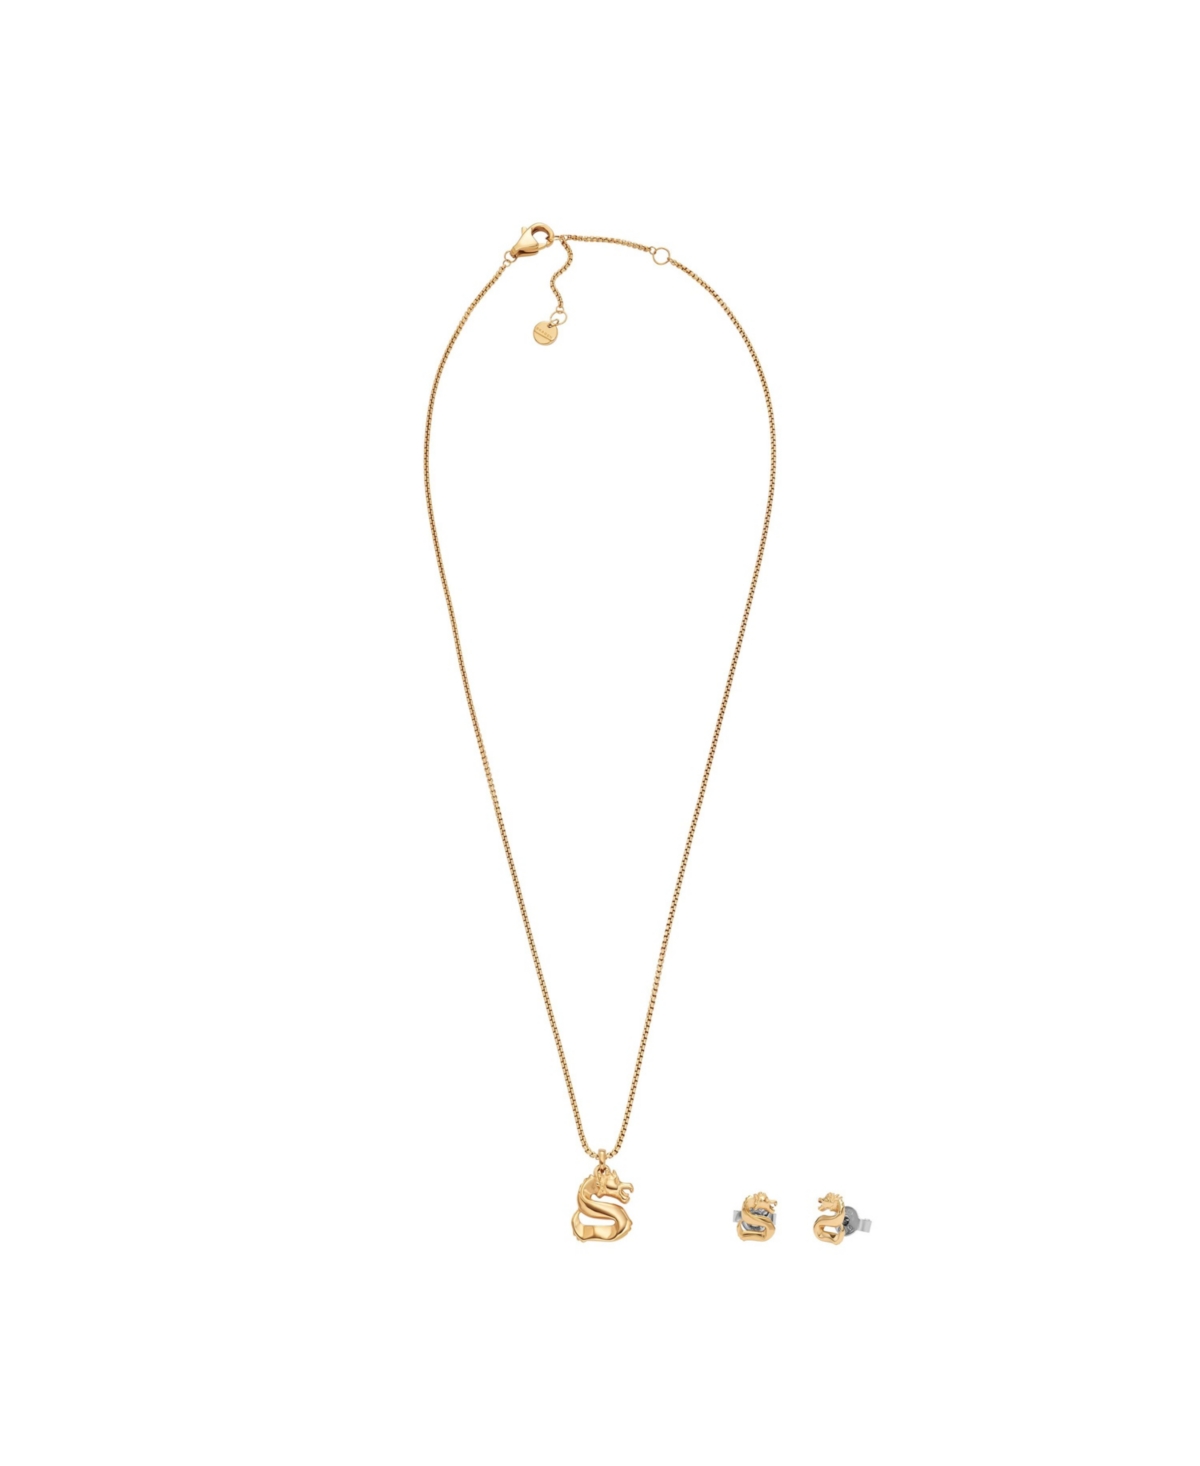 Women's Lny Gift Set Gold-Tone Stainless Steel Earrings and Necklace, SKJB1017SET